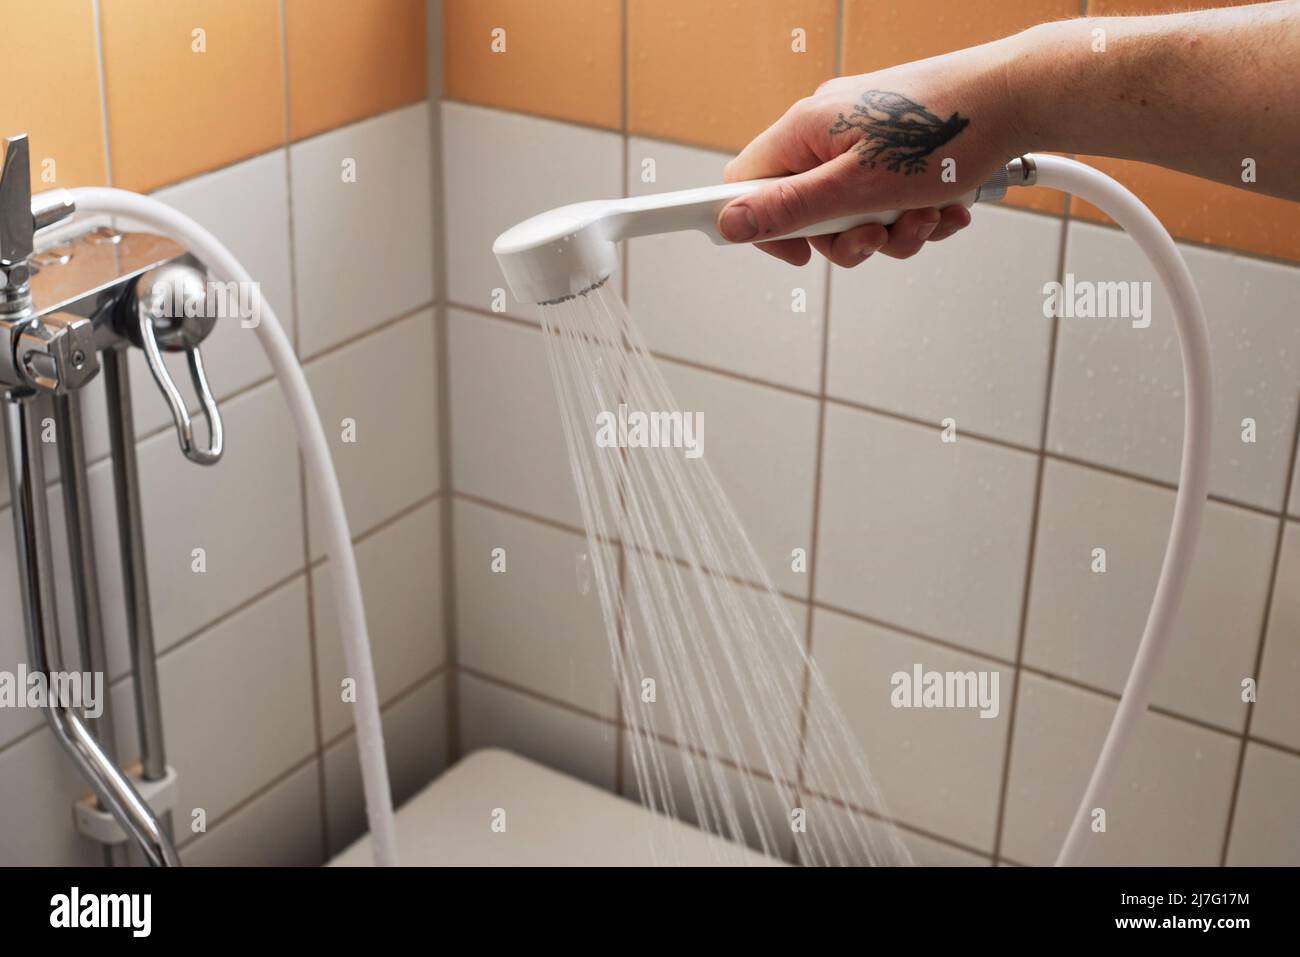 https://c8.alamy.com/comp/2J7G17M/hand-holding-shower-head-2J7G17M.jpg